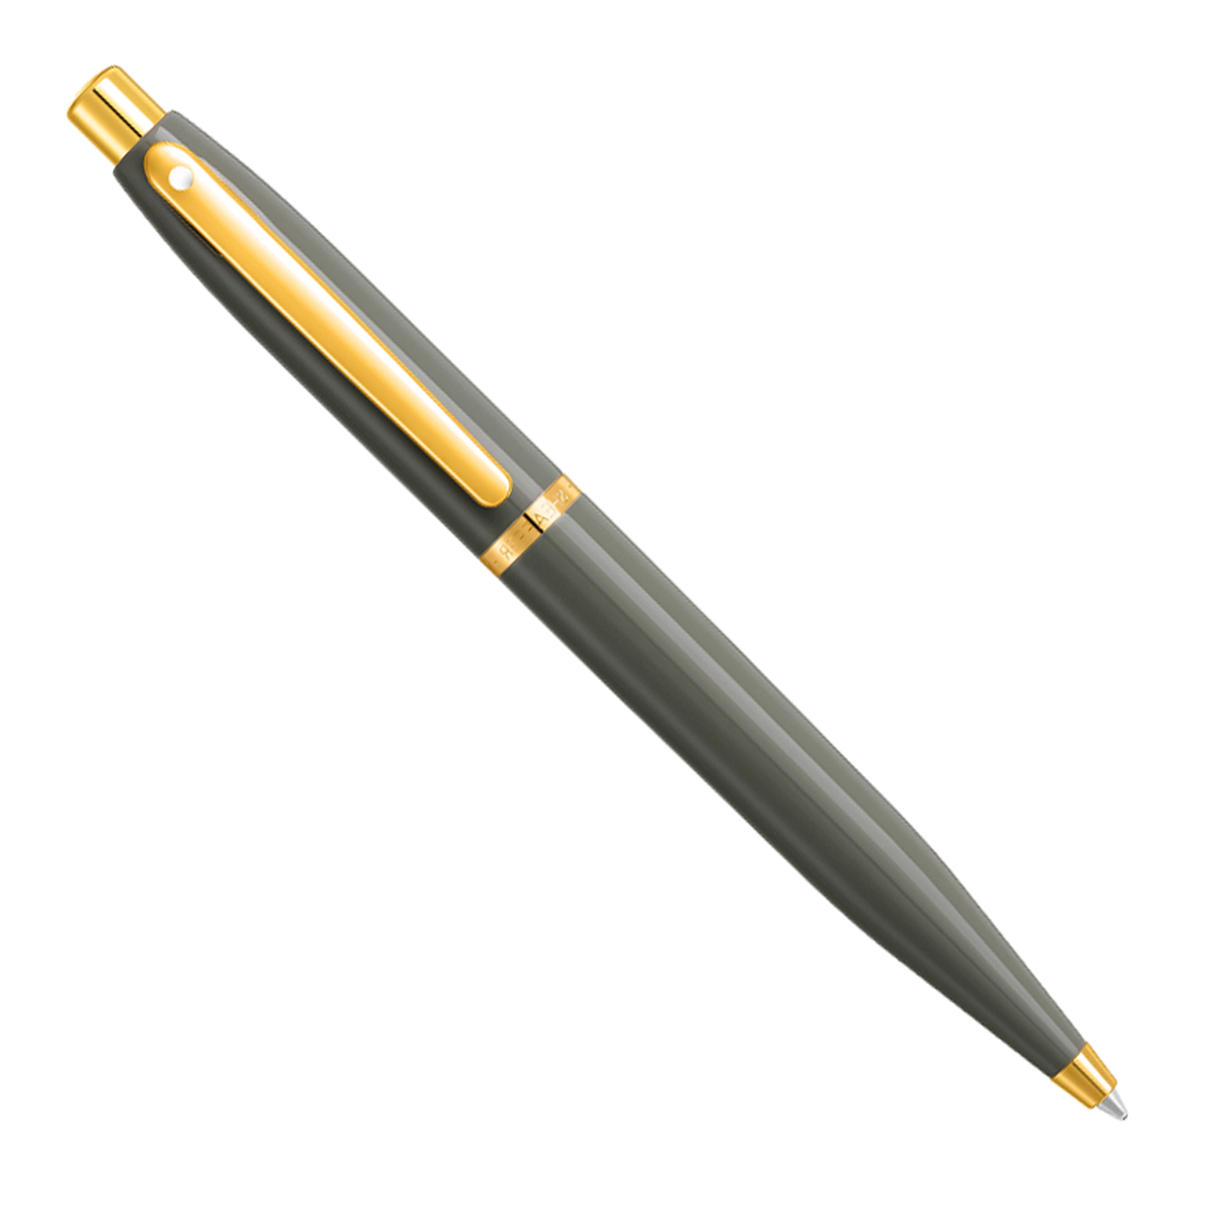 Sheaffer VFM Light Grey w/PVD Gold Trim - Ballpoint Pen